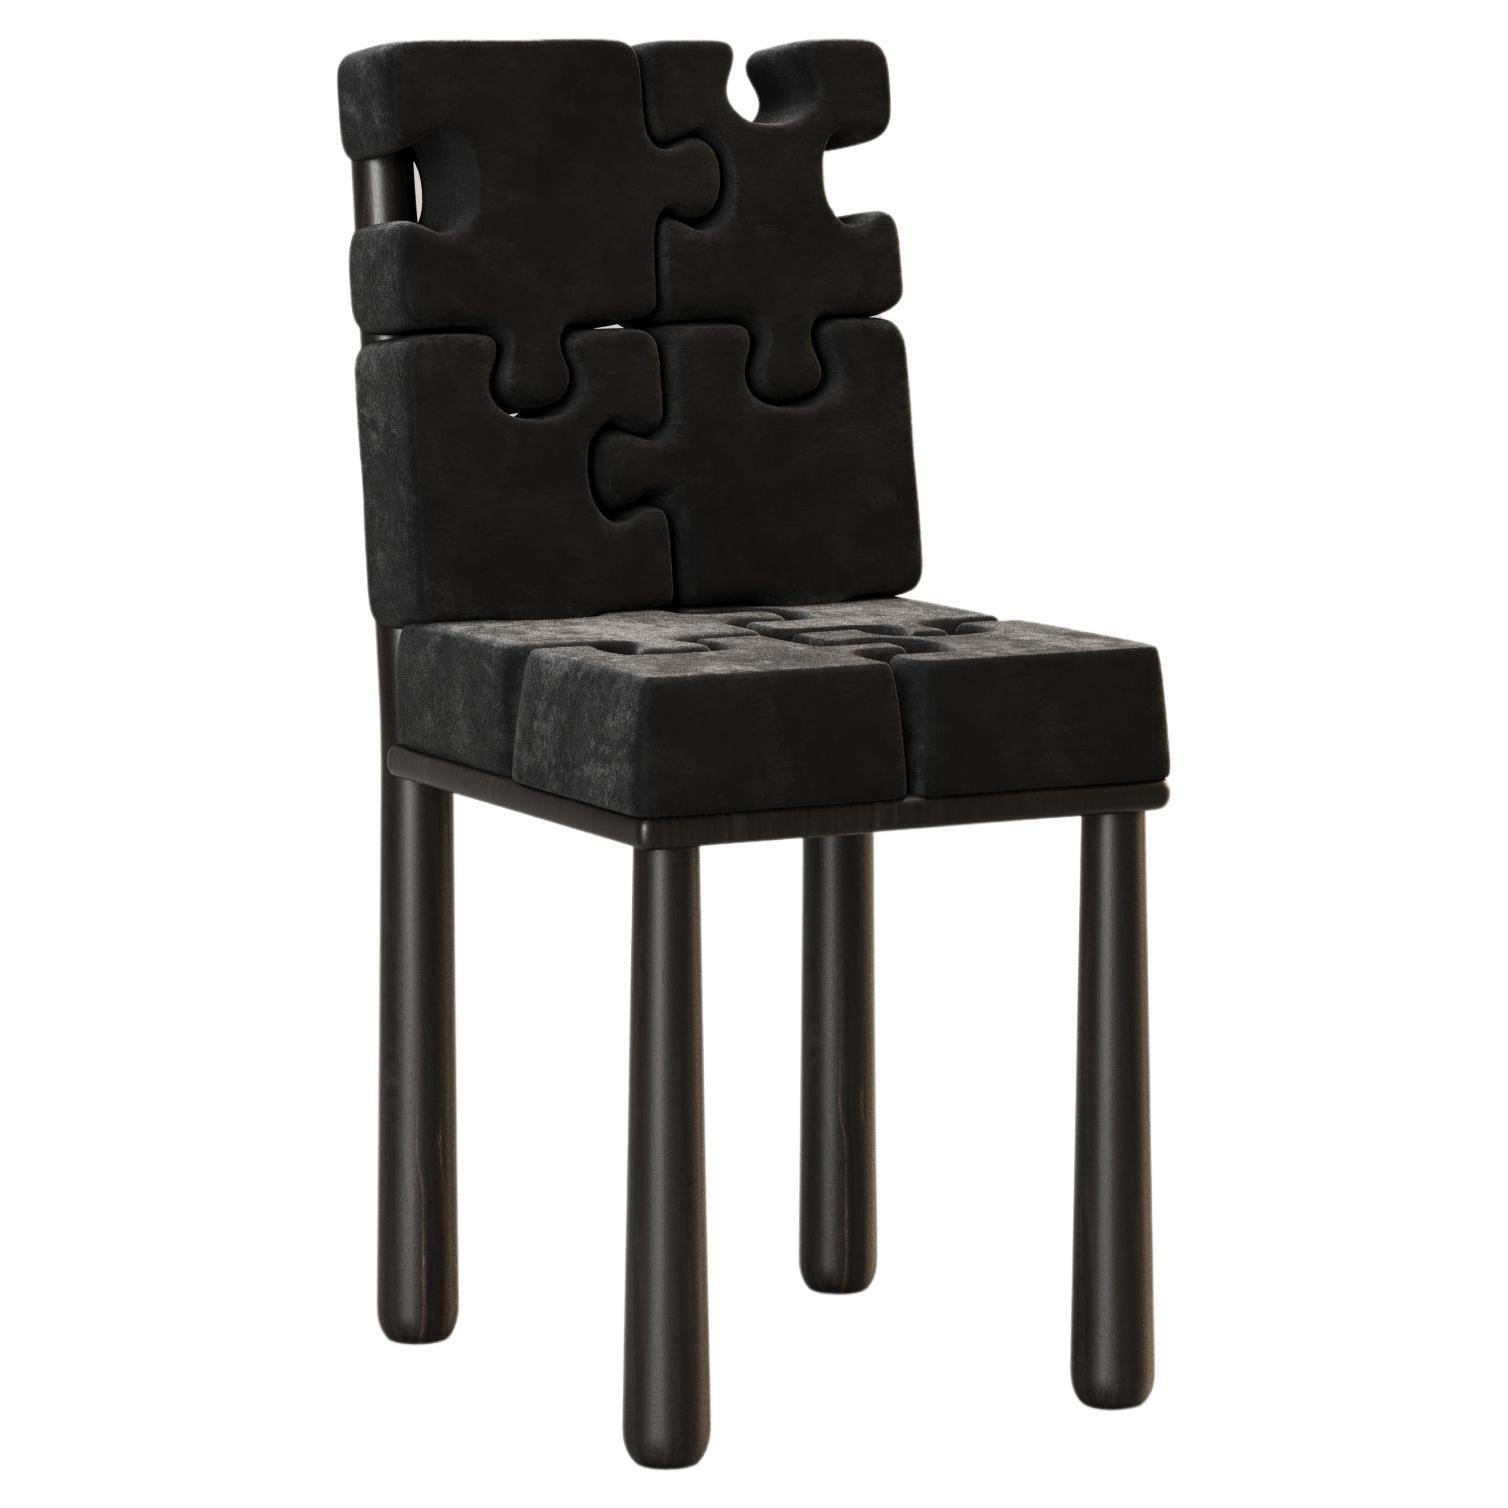 L'INSOLENTE Velvet Chair in Black by Alexandre Ligios, REP by Tuleste Factory